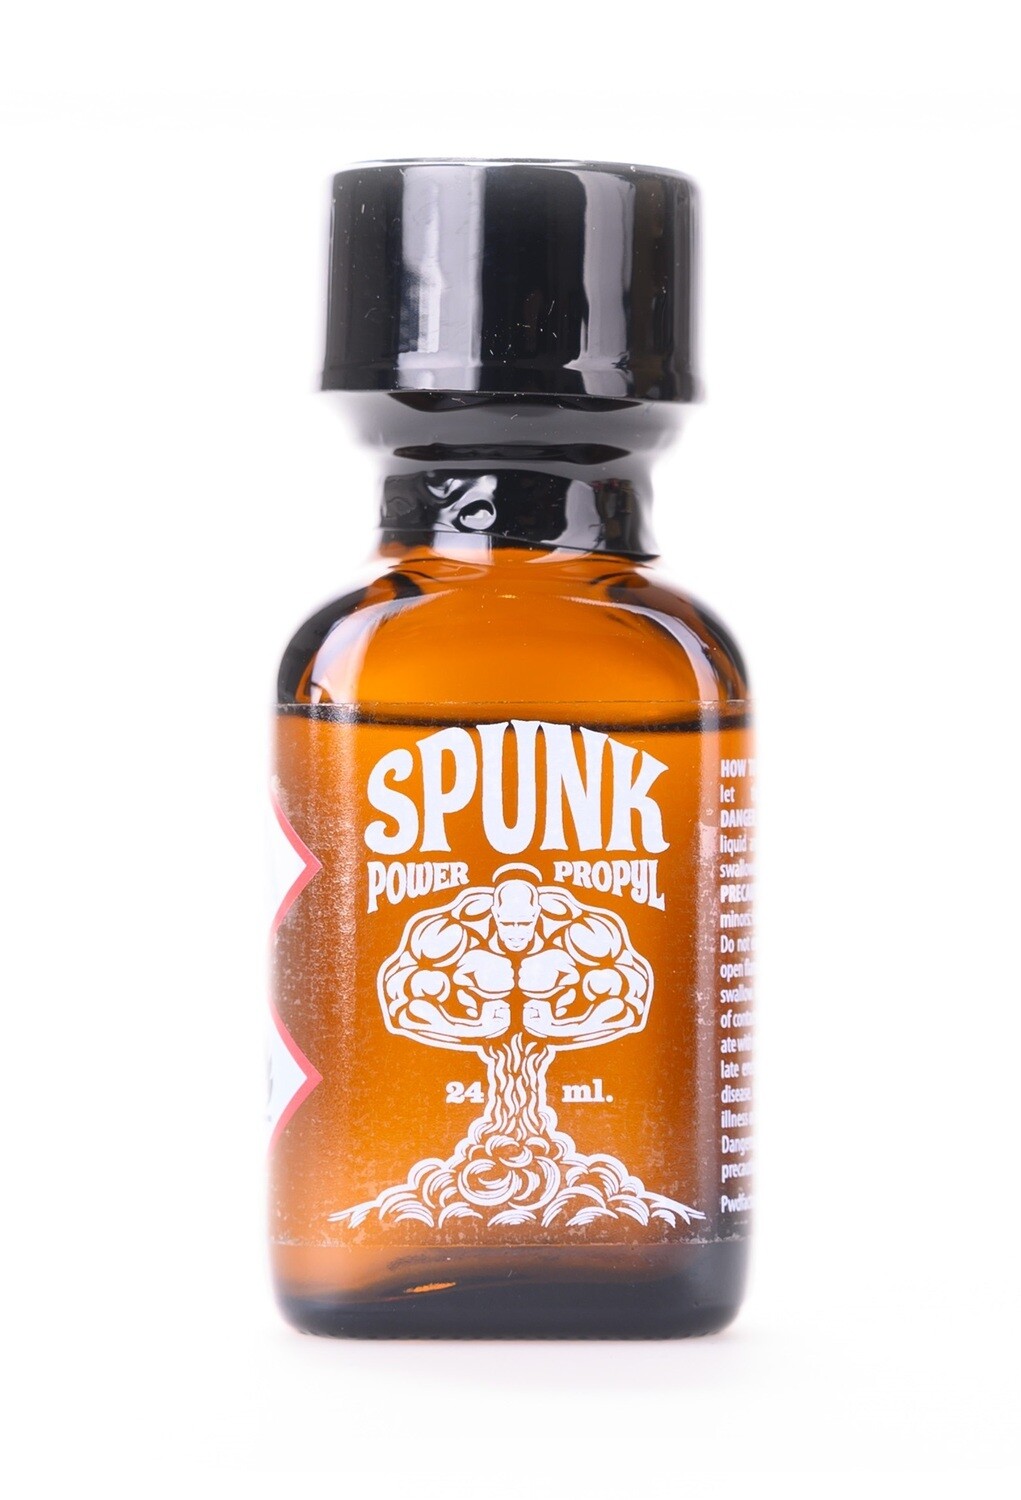 Spunk 24 ml.